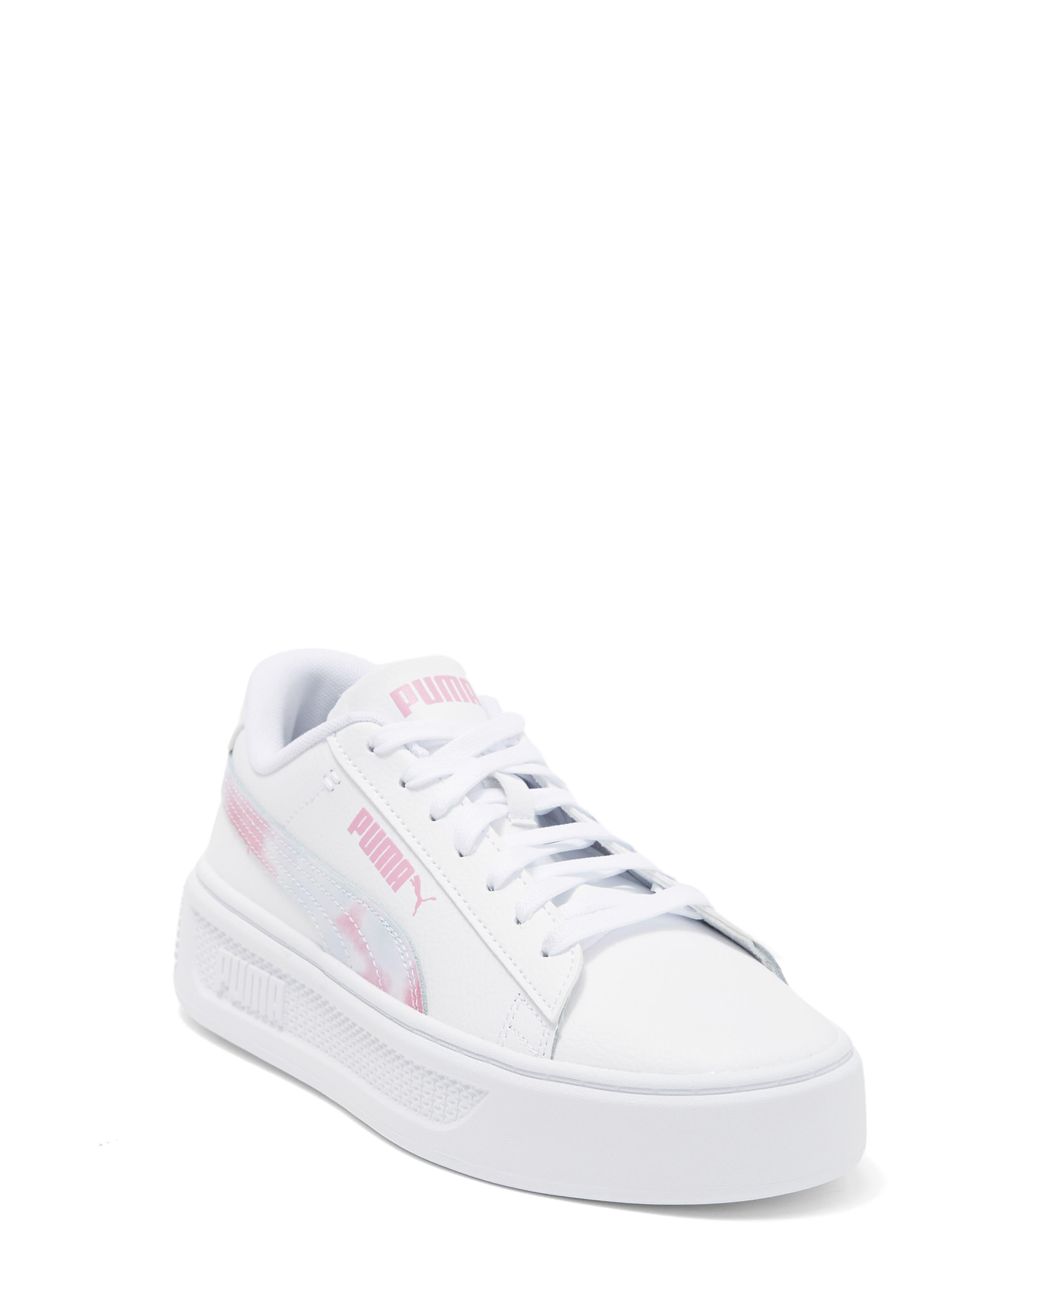 PUMA Smash Platform V3 Soft Sneaker in White | Lyst